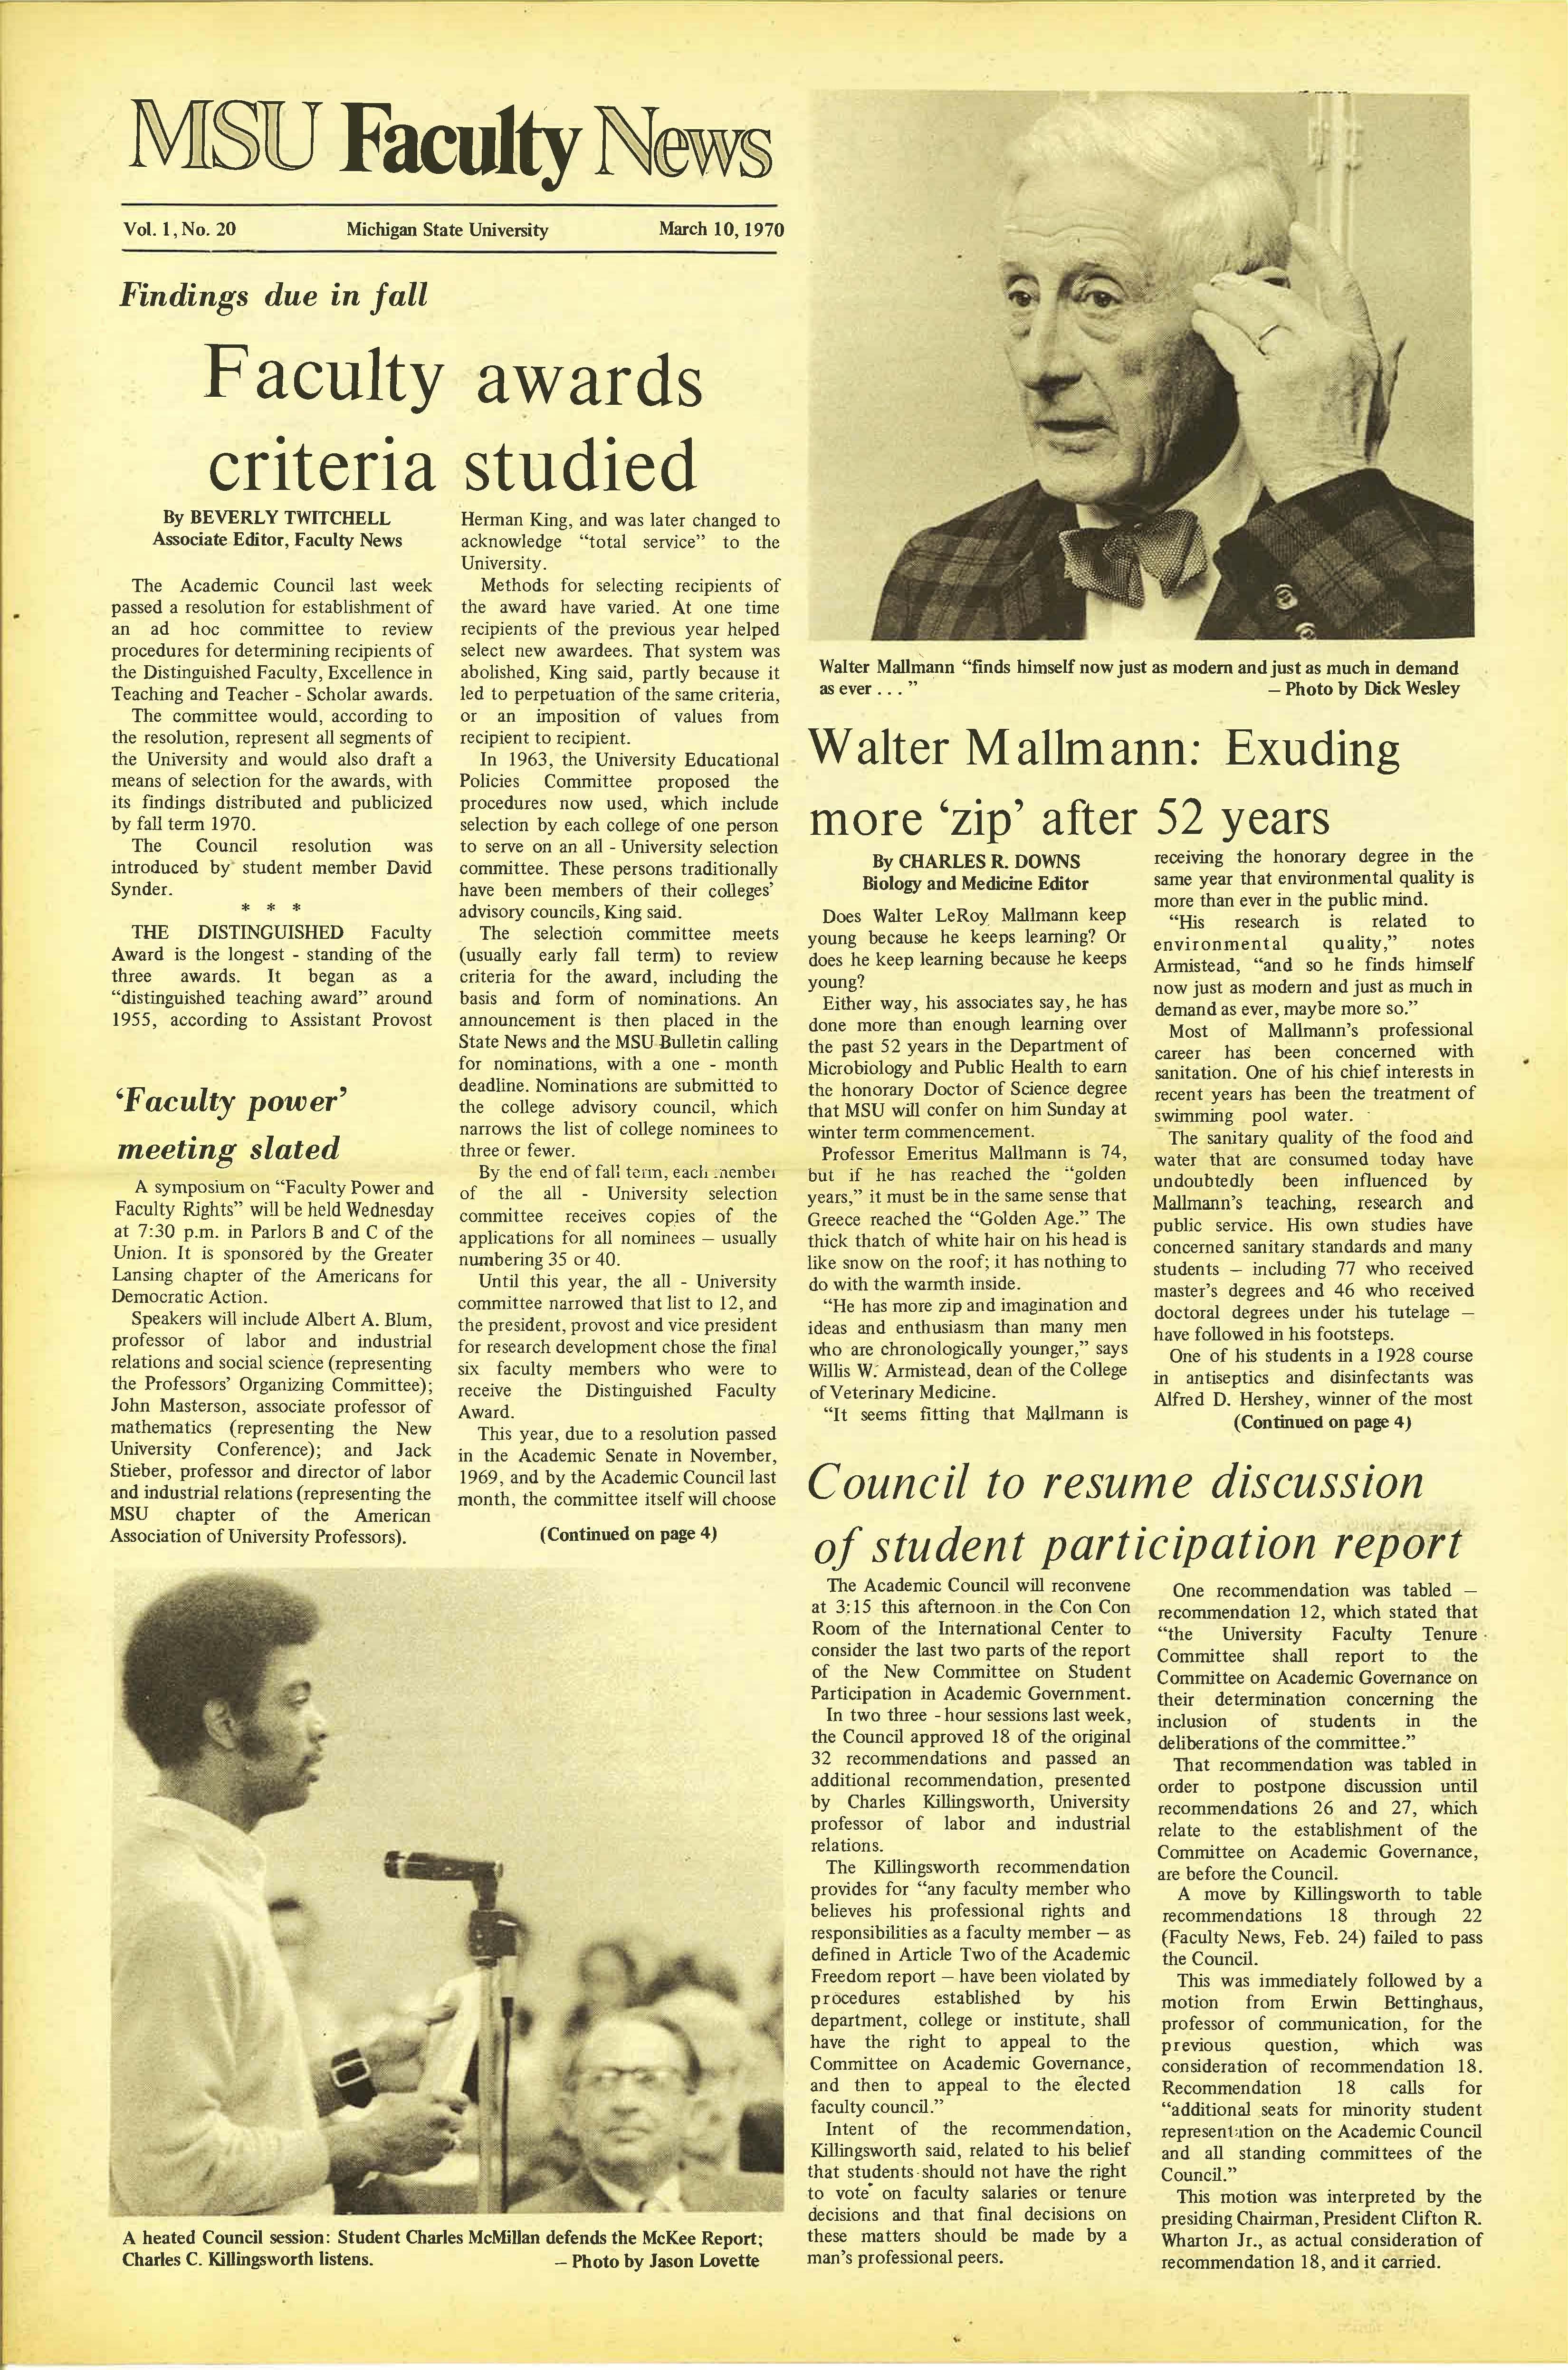 MSU News Bulletin, Vol. 1, No. 34, August 11, 1970